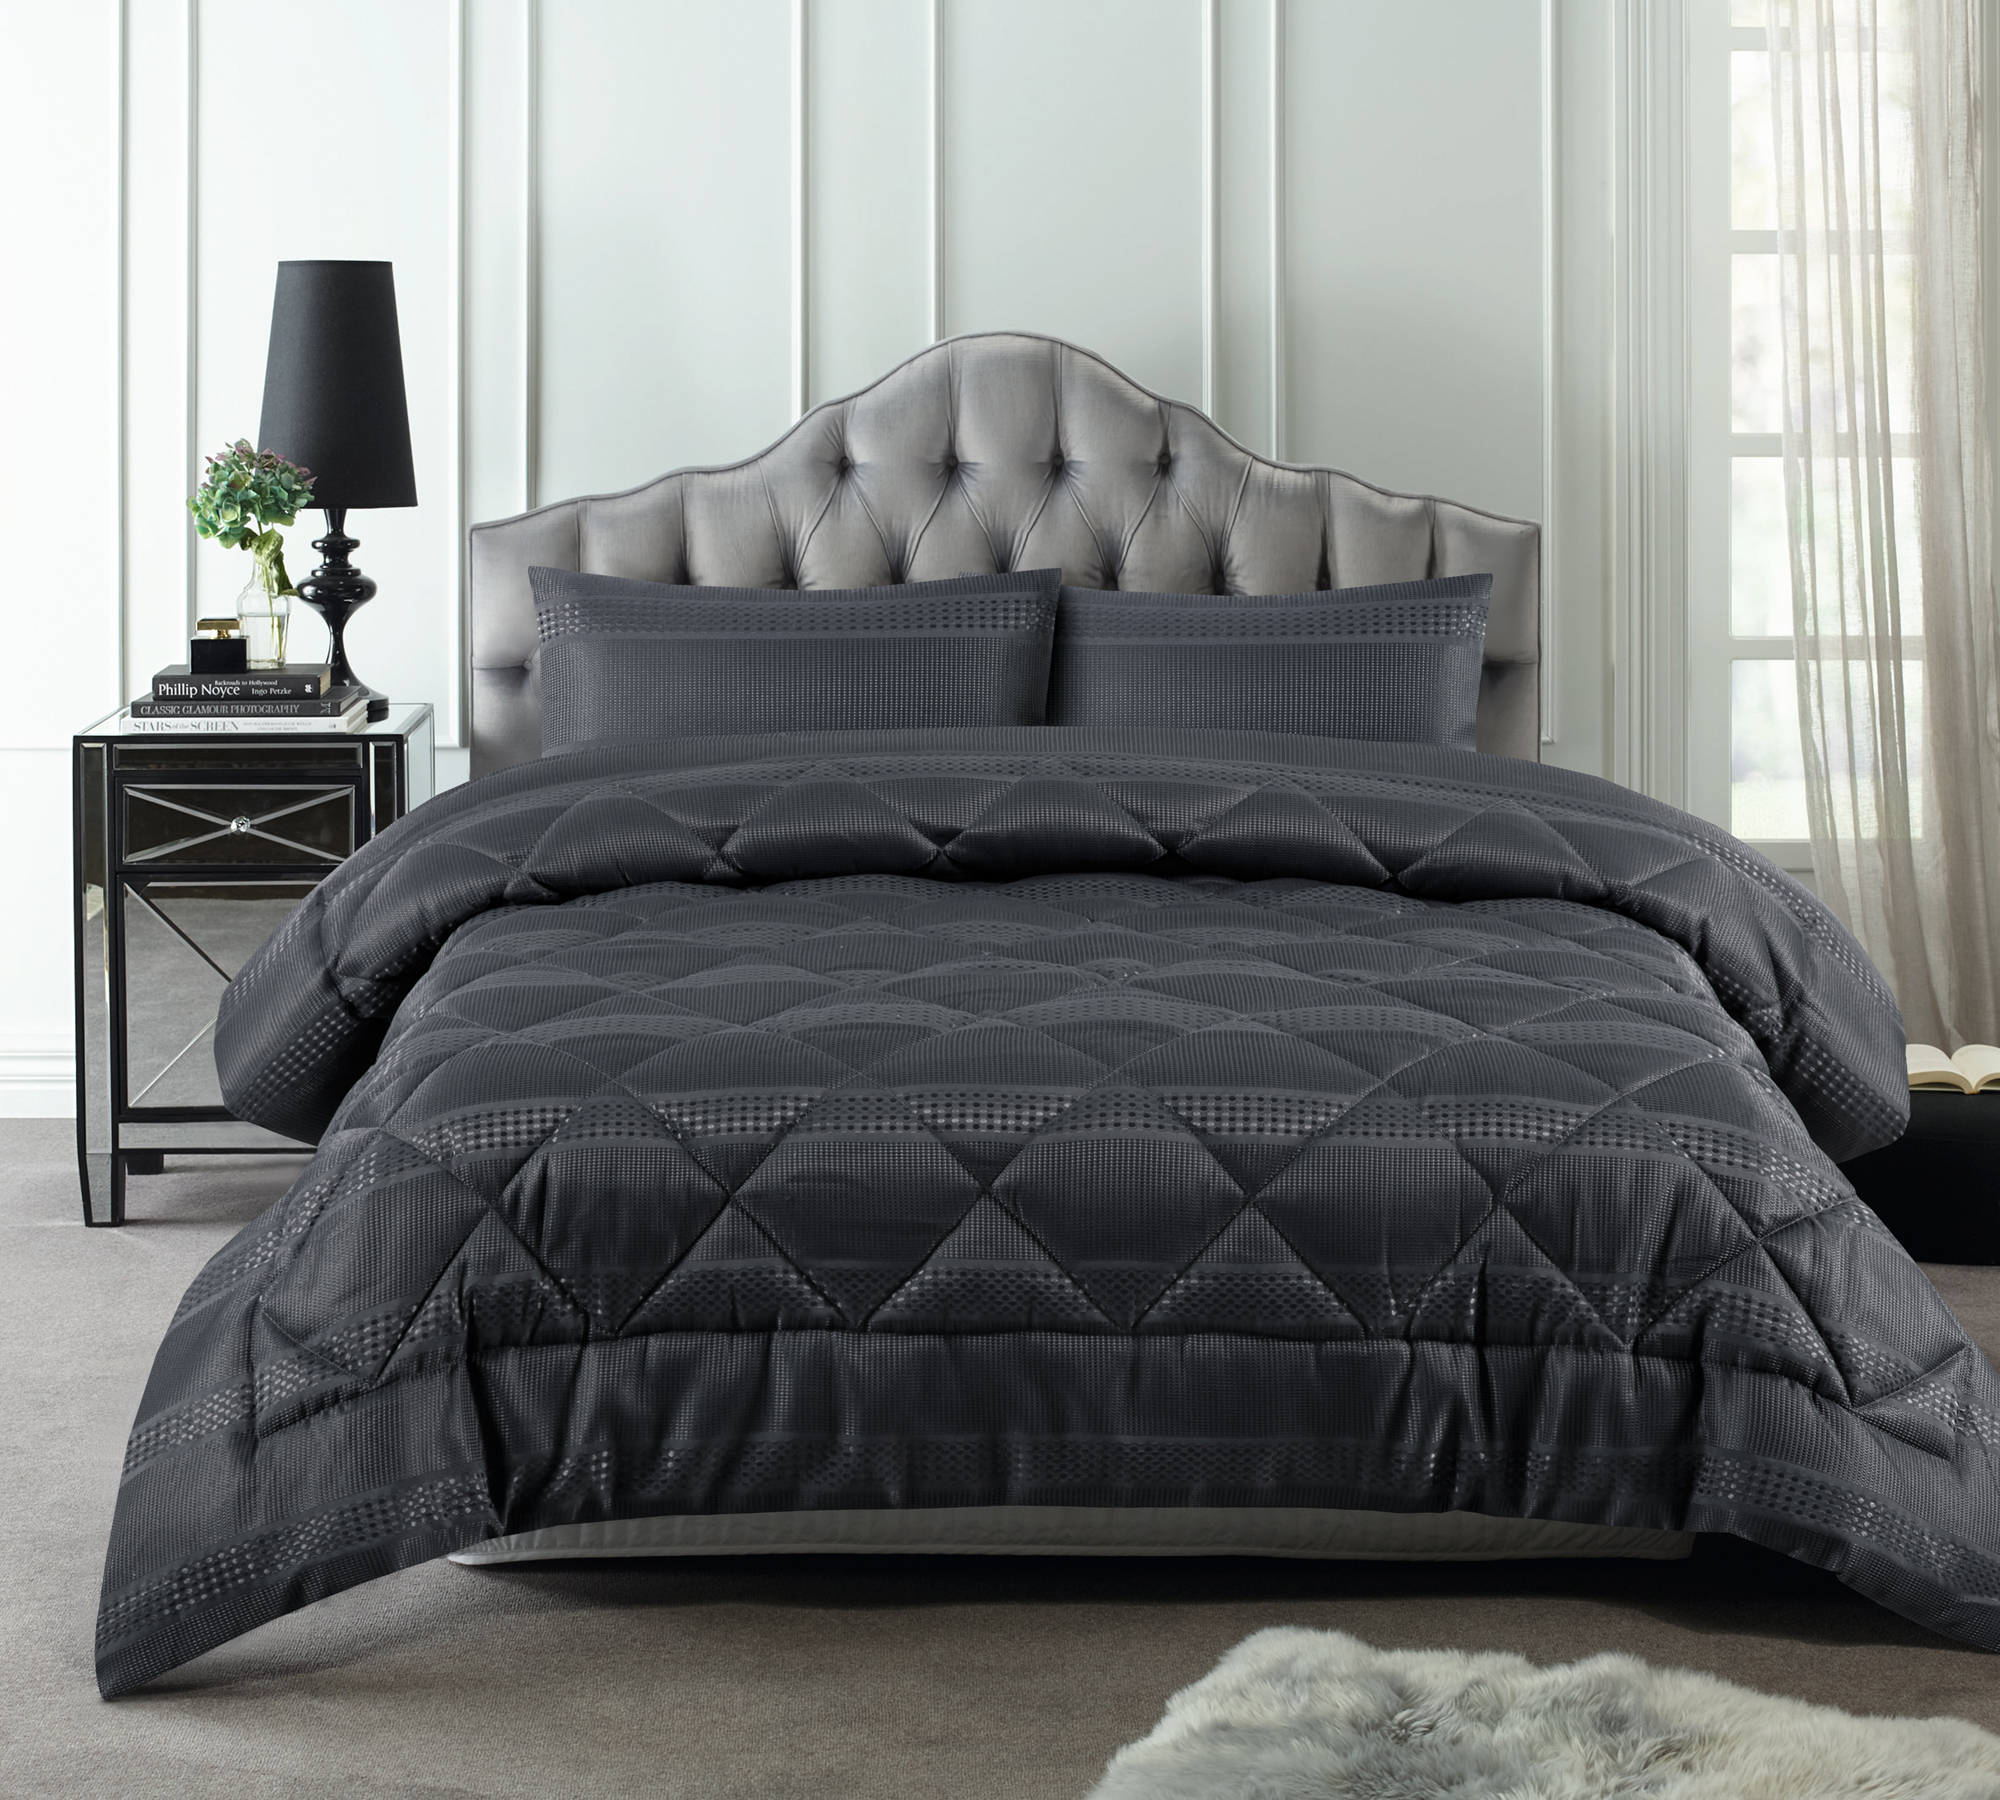 Stripe Waffle Duvet Quilt Cover & Pillowcases Luxury Bedding Set All Sizes